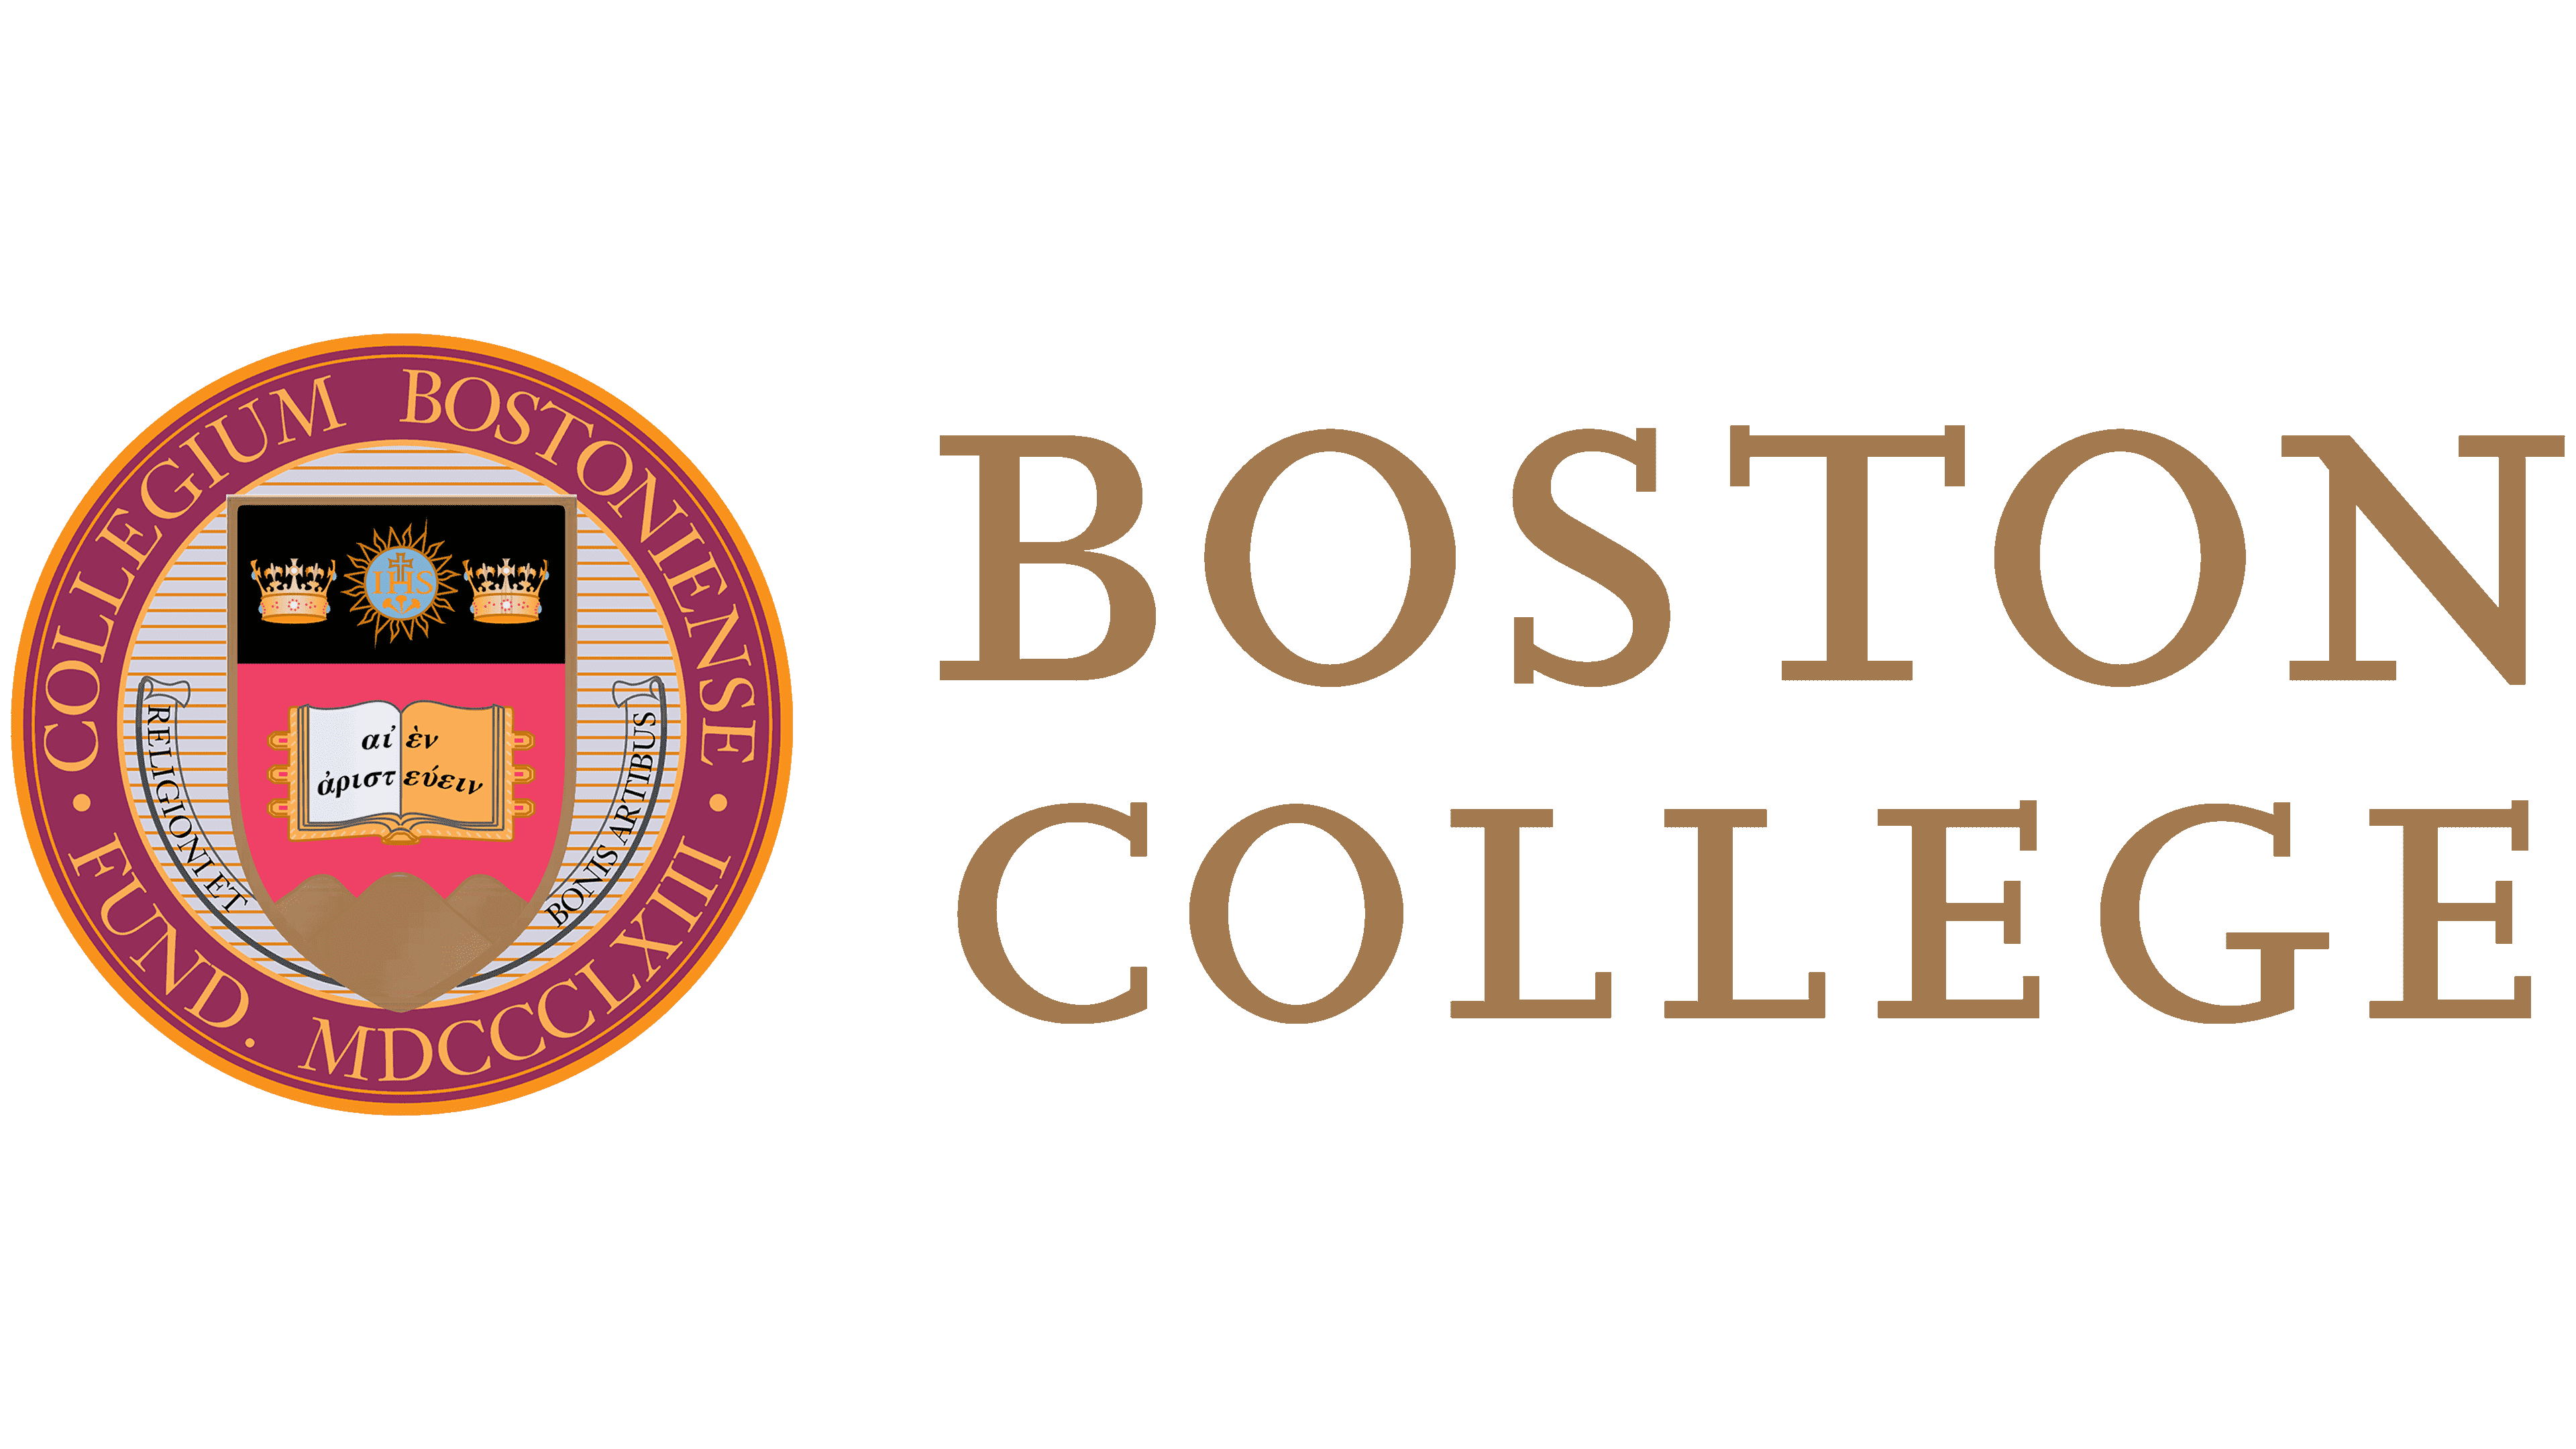 Boston College Emblem